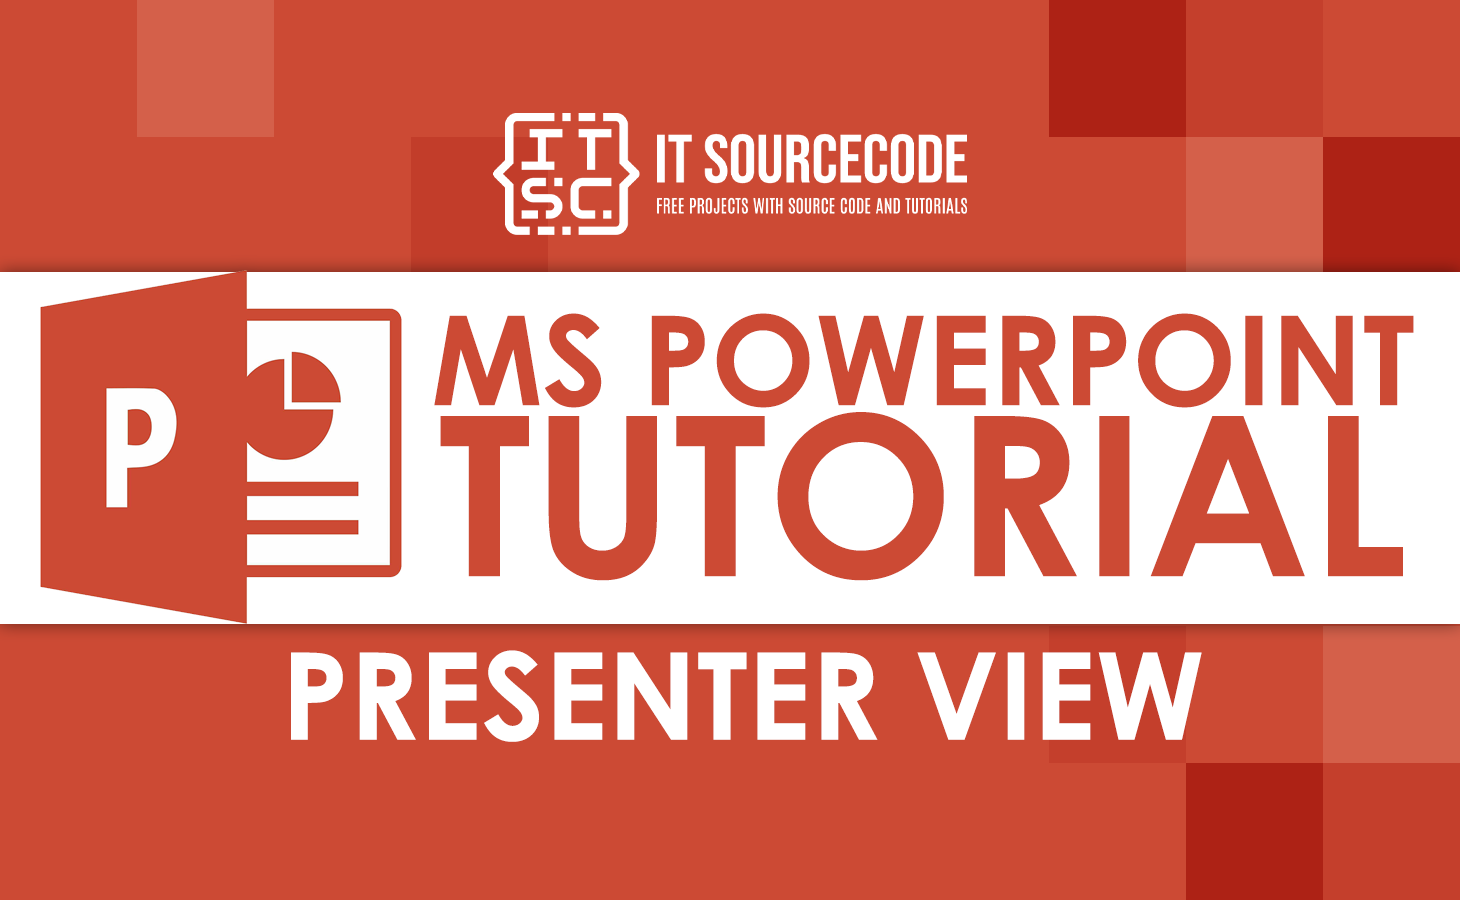 MS Powerpoint Tutorial Presenter View